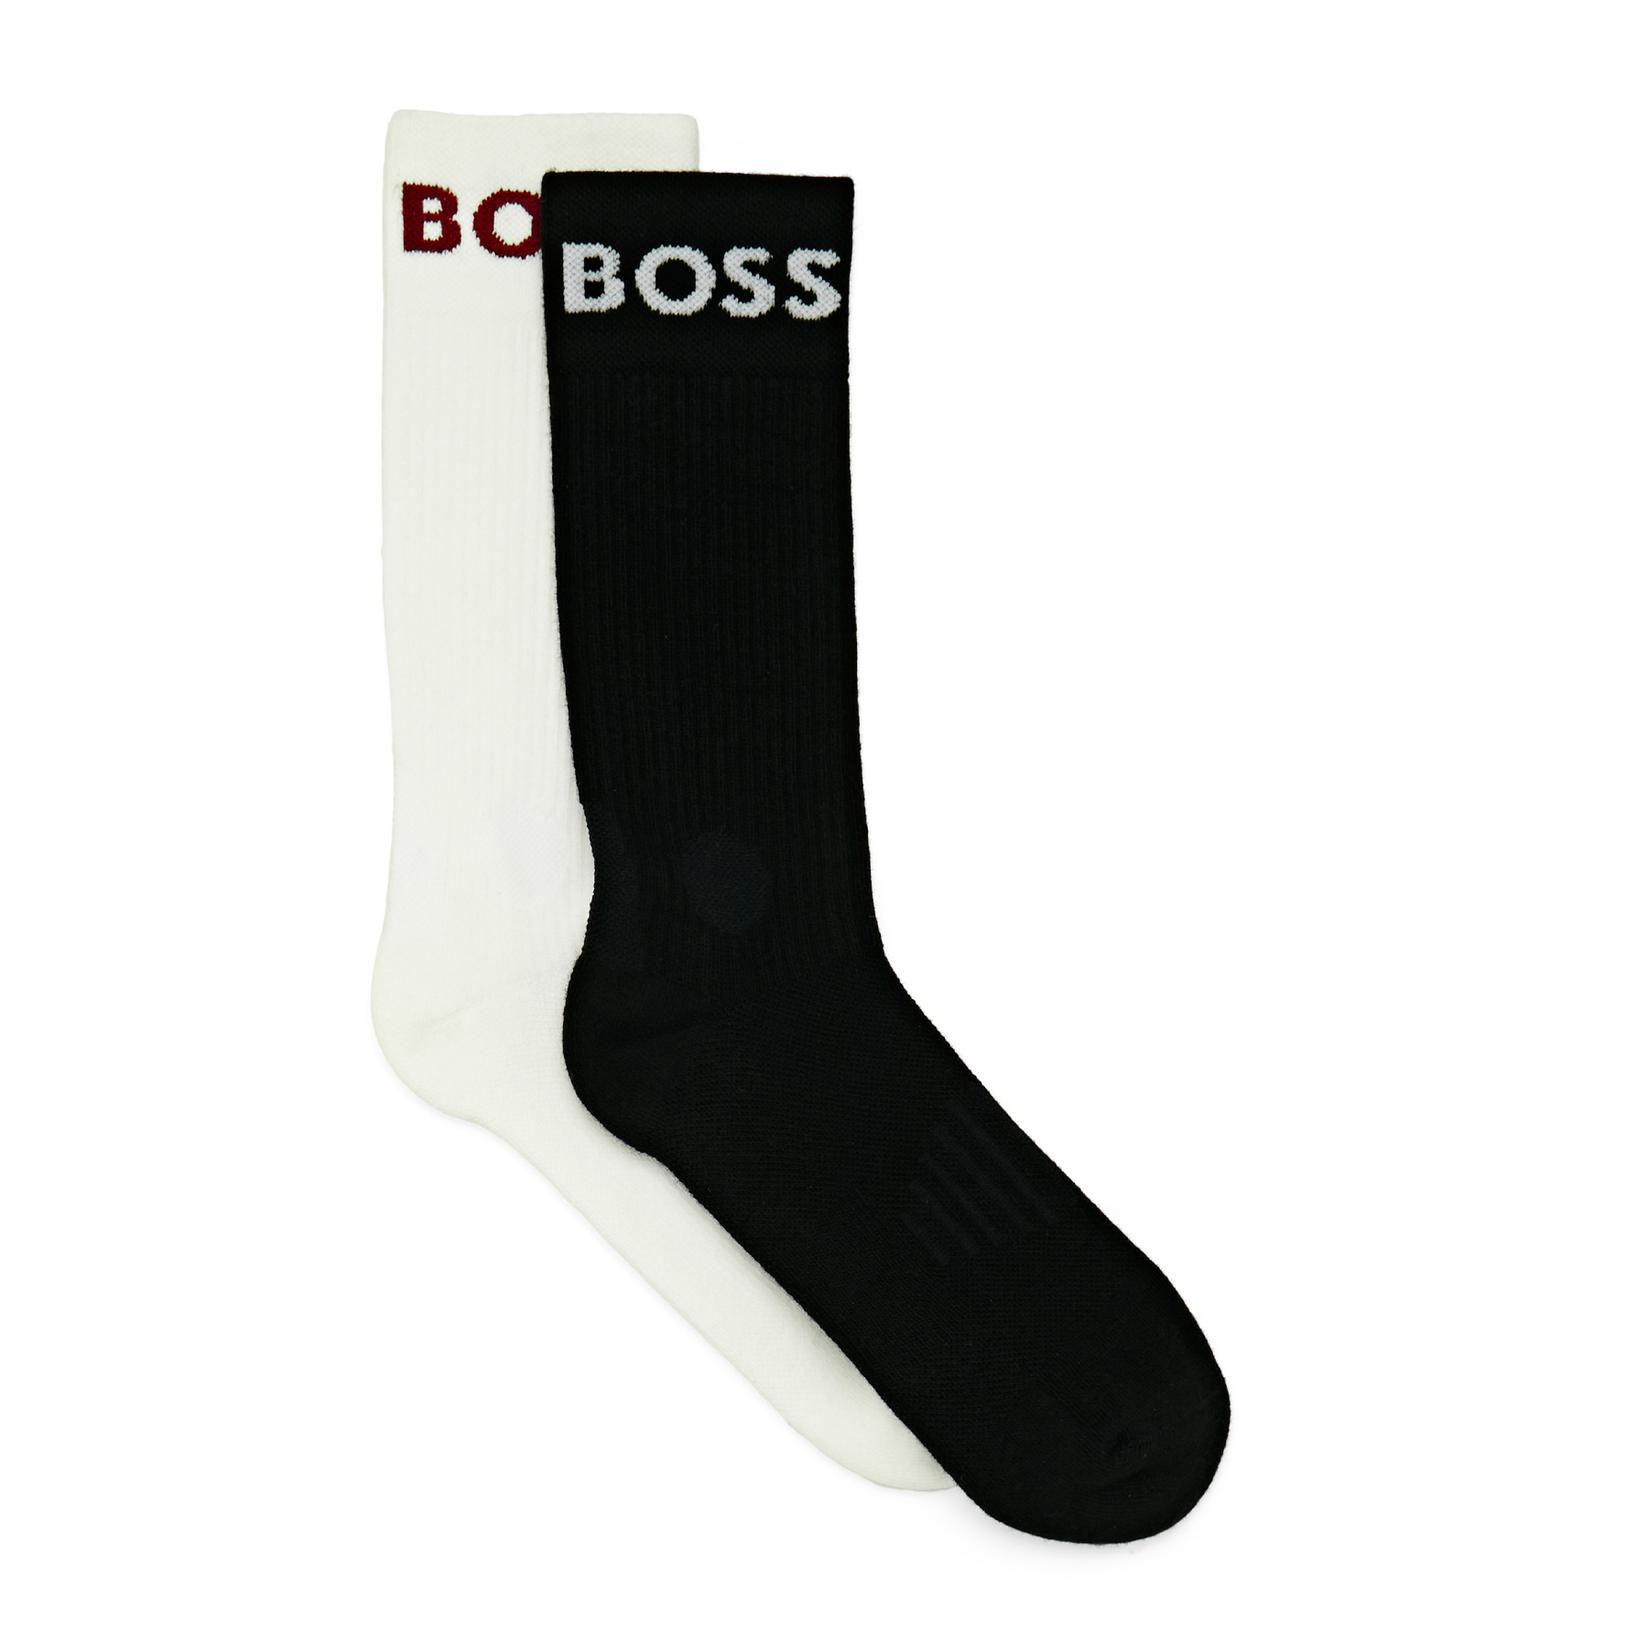 BOSS Muške čarape 2/1 crno-bele